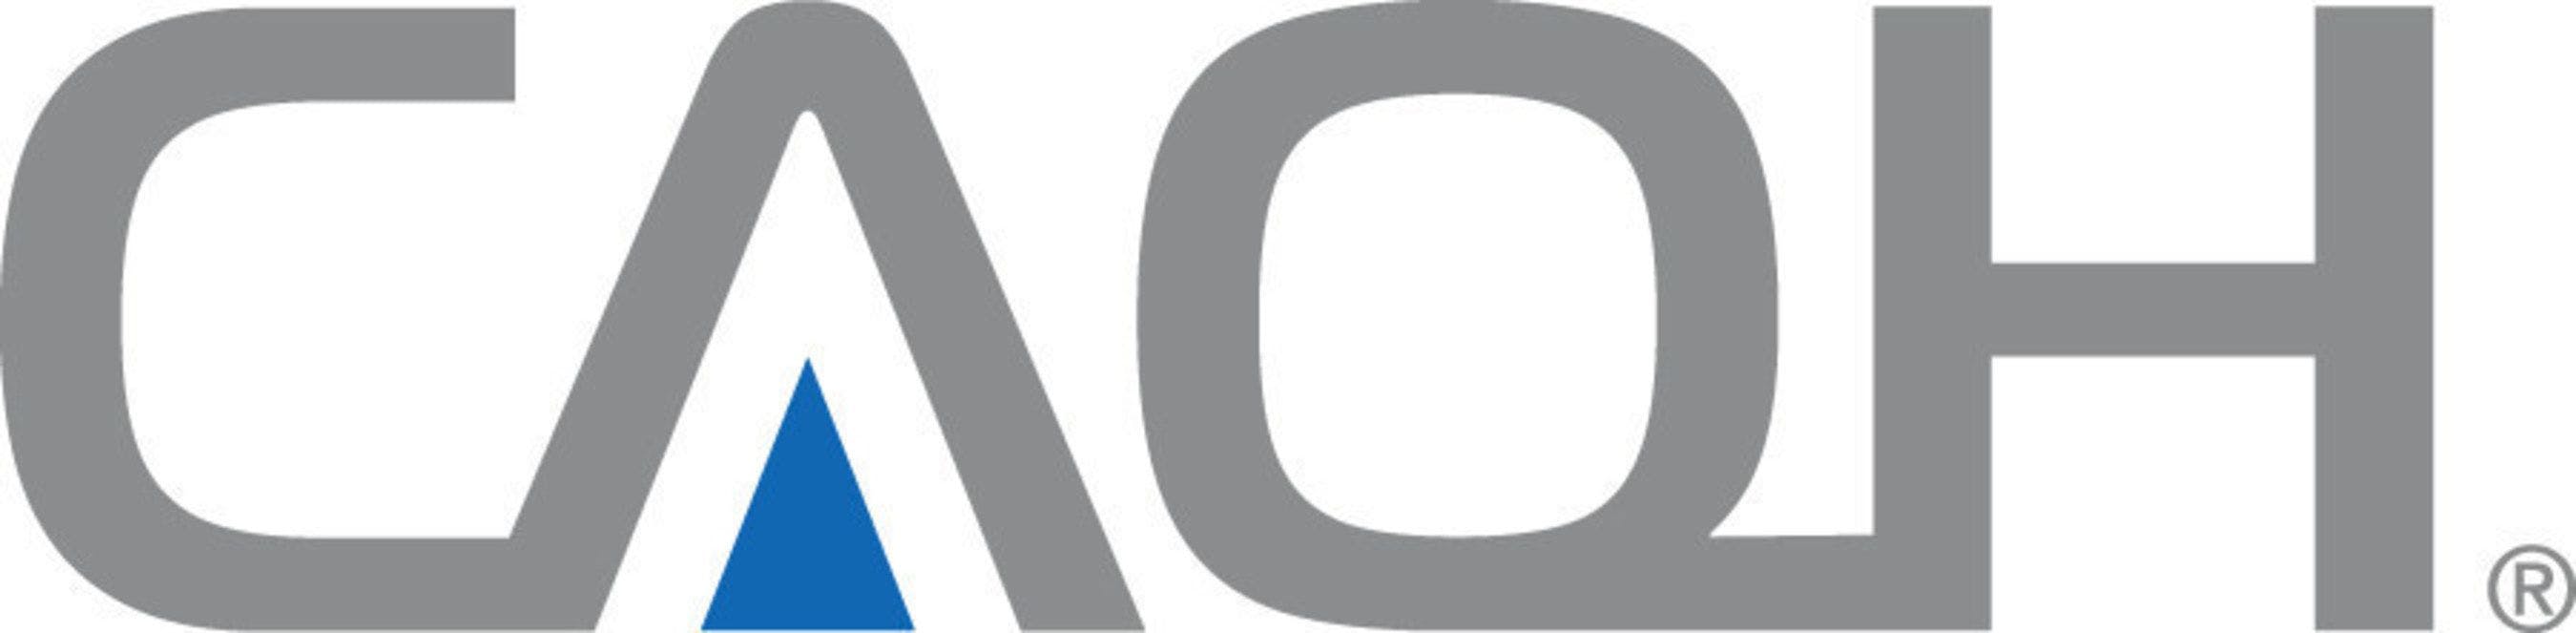 CAQH logo | CAQH